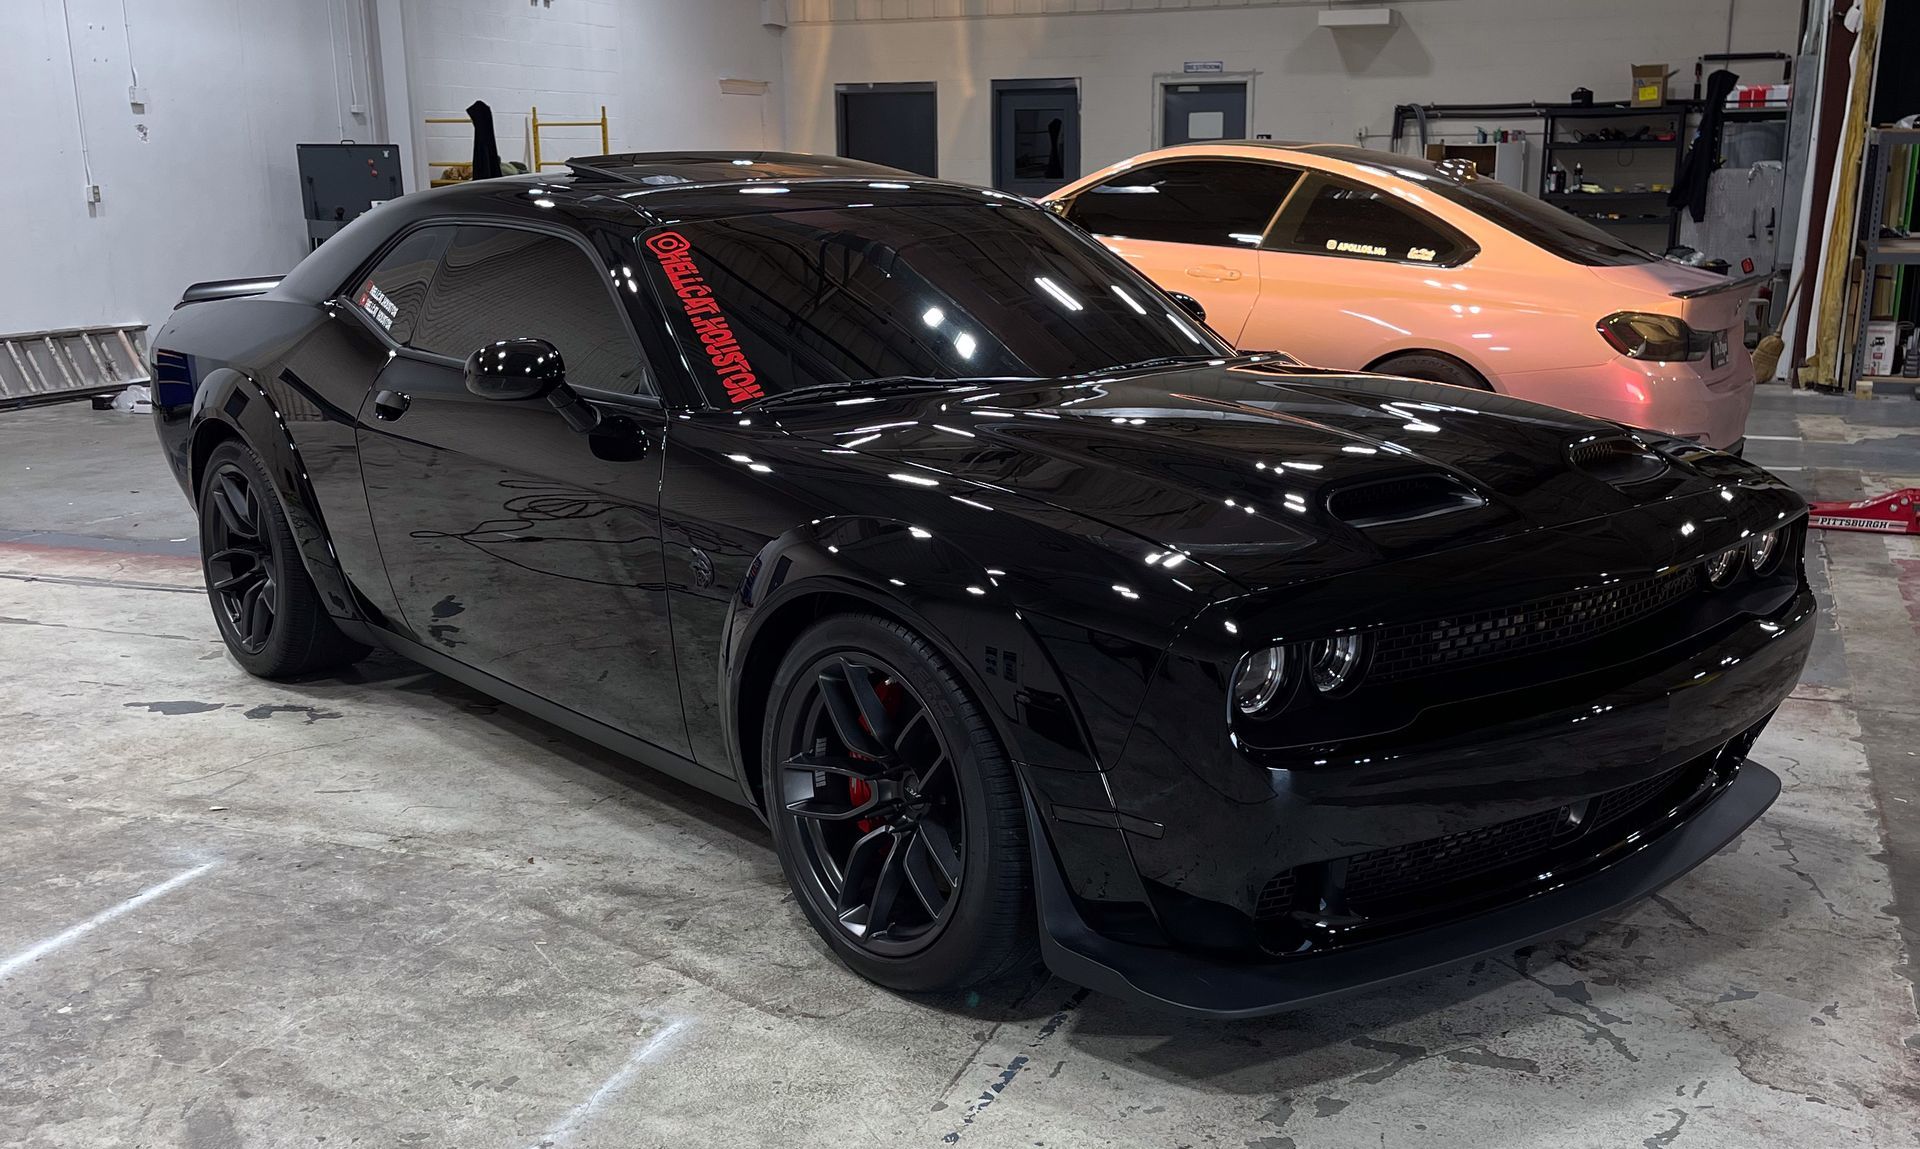 a black Dodge Challenger is parked in a garage.